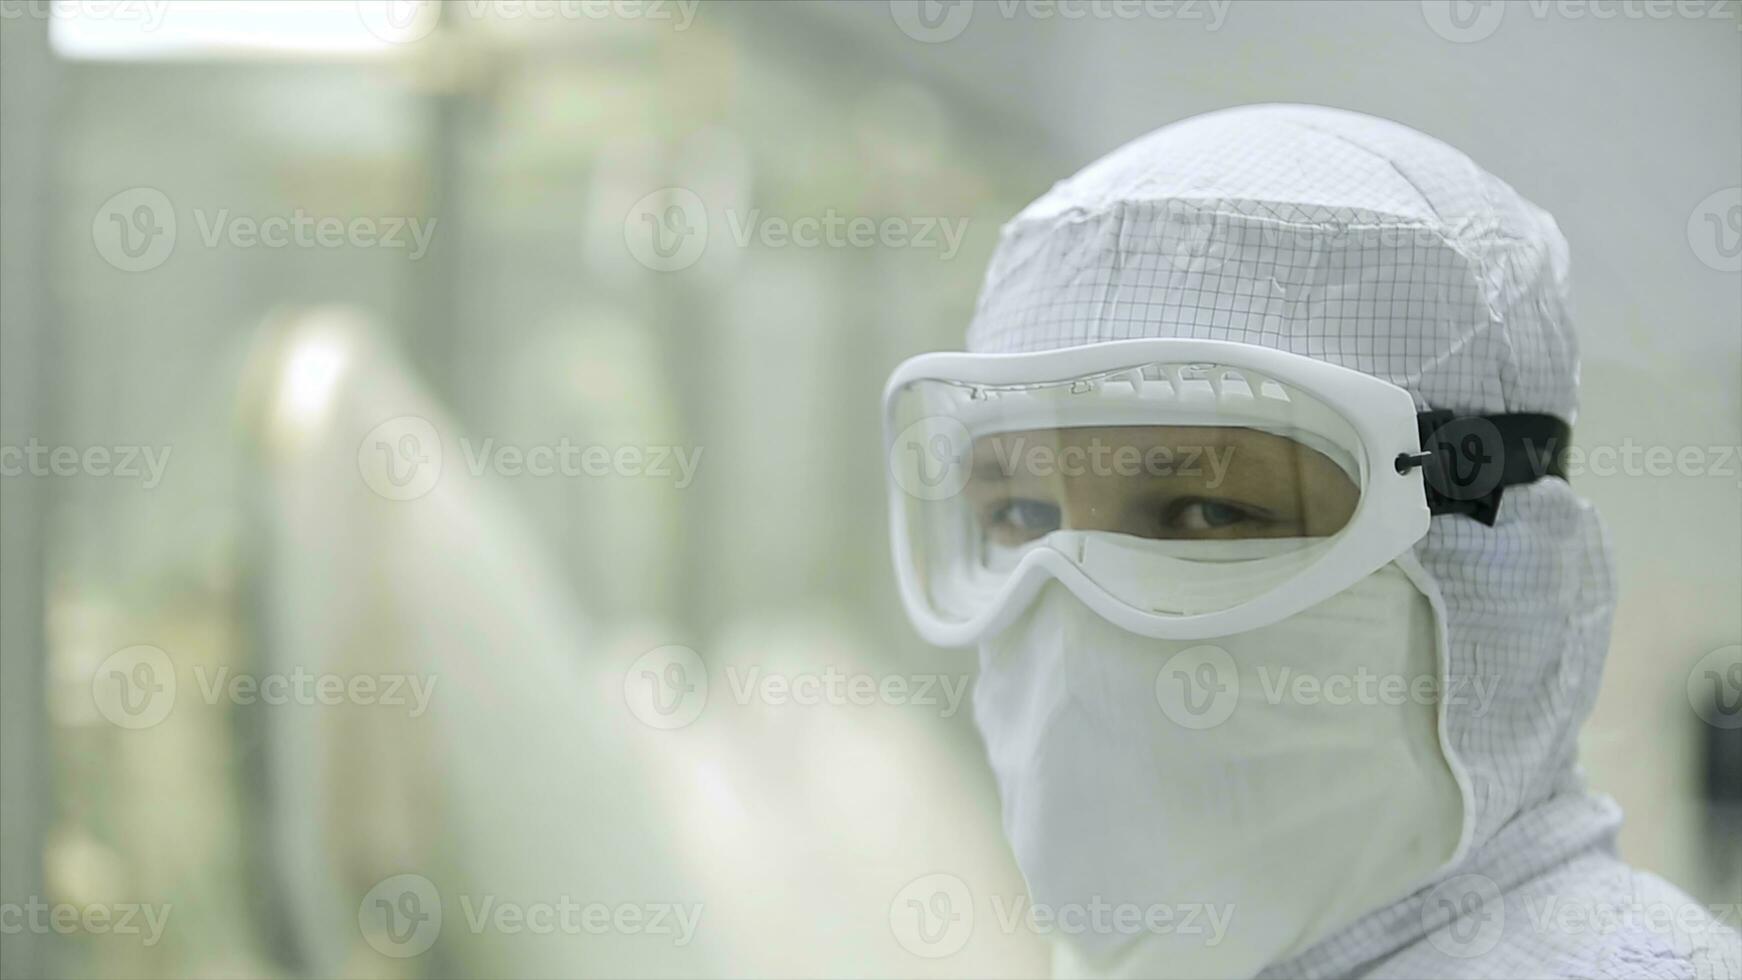 farmacie. farmaceutisch arbeider opereert blaar verpakking machine. kwaliteit controle. farmacie. arbeider operator portret foto